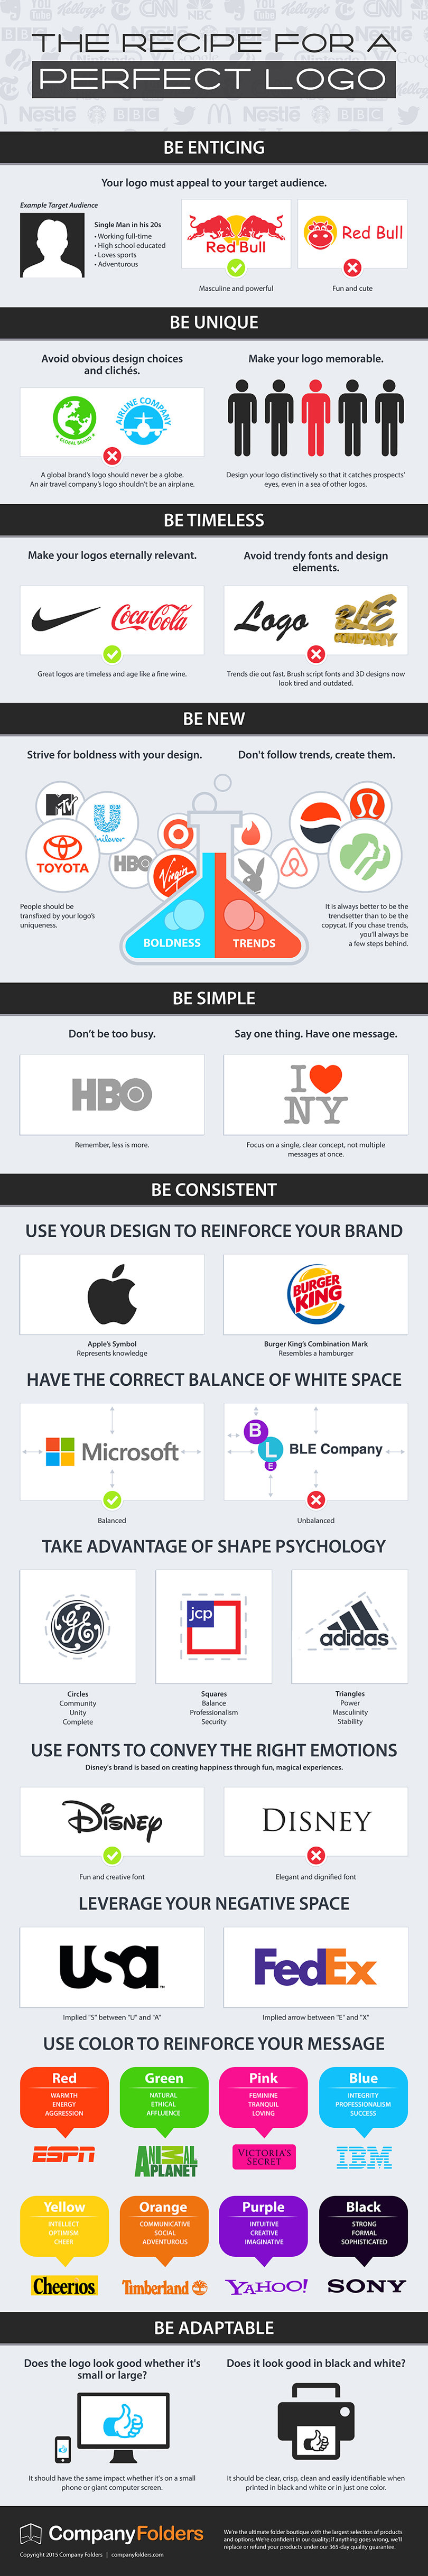 Logo design recipe infographic by Company Folders